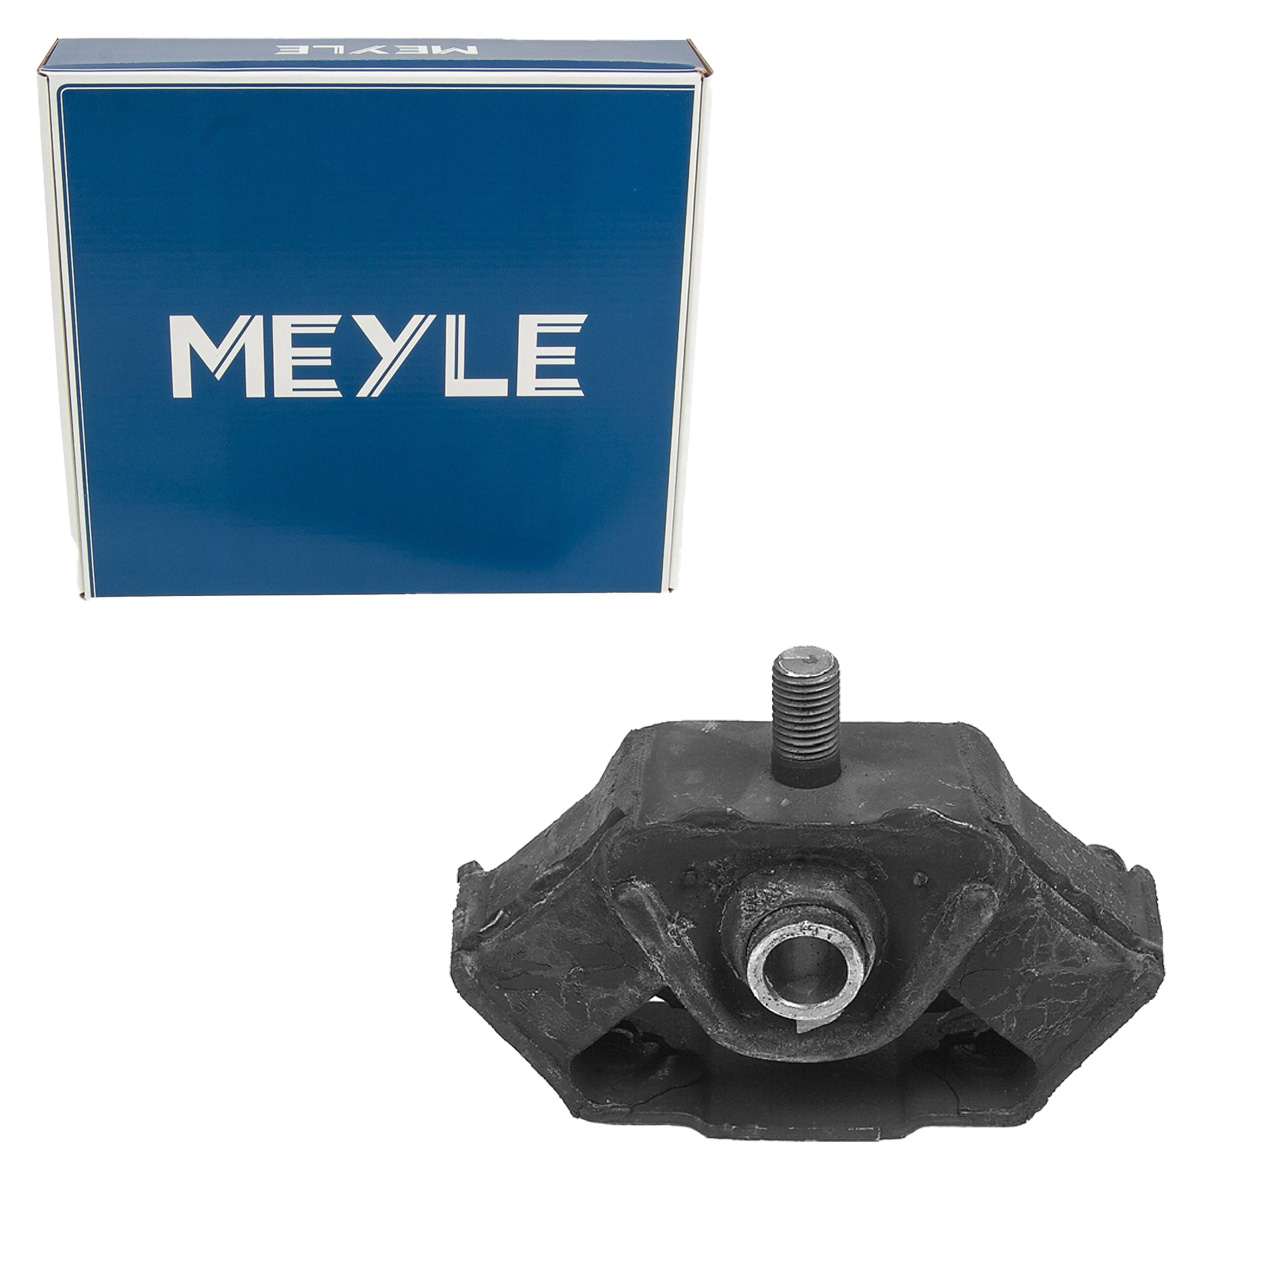 MEYLE Getriebelager Schaltgetriebe MERCEDES-BENZ C123 W123 190 W201 hinten 1232401318